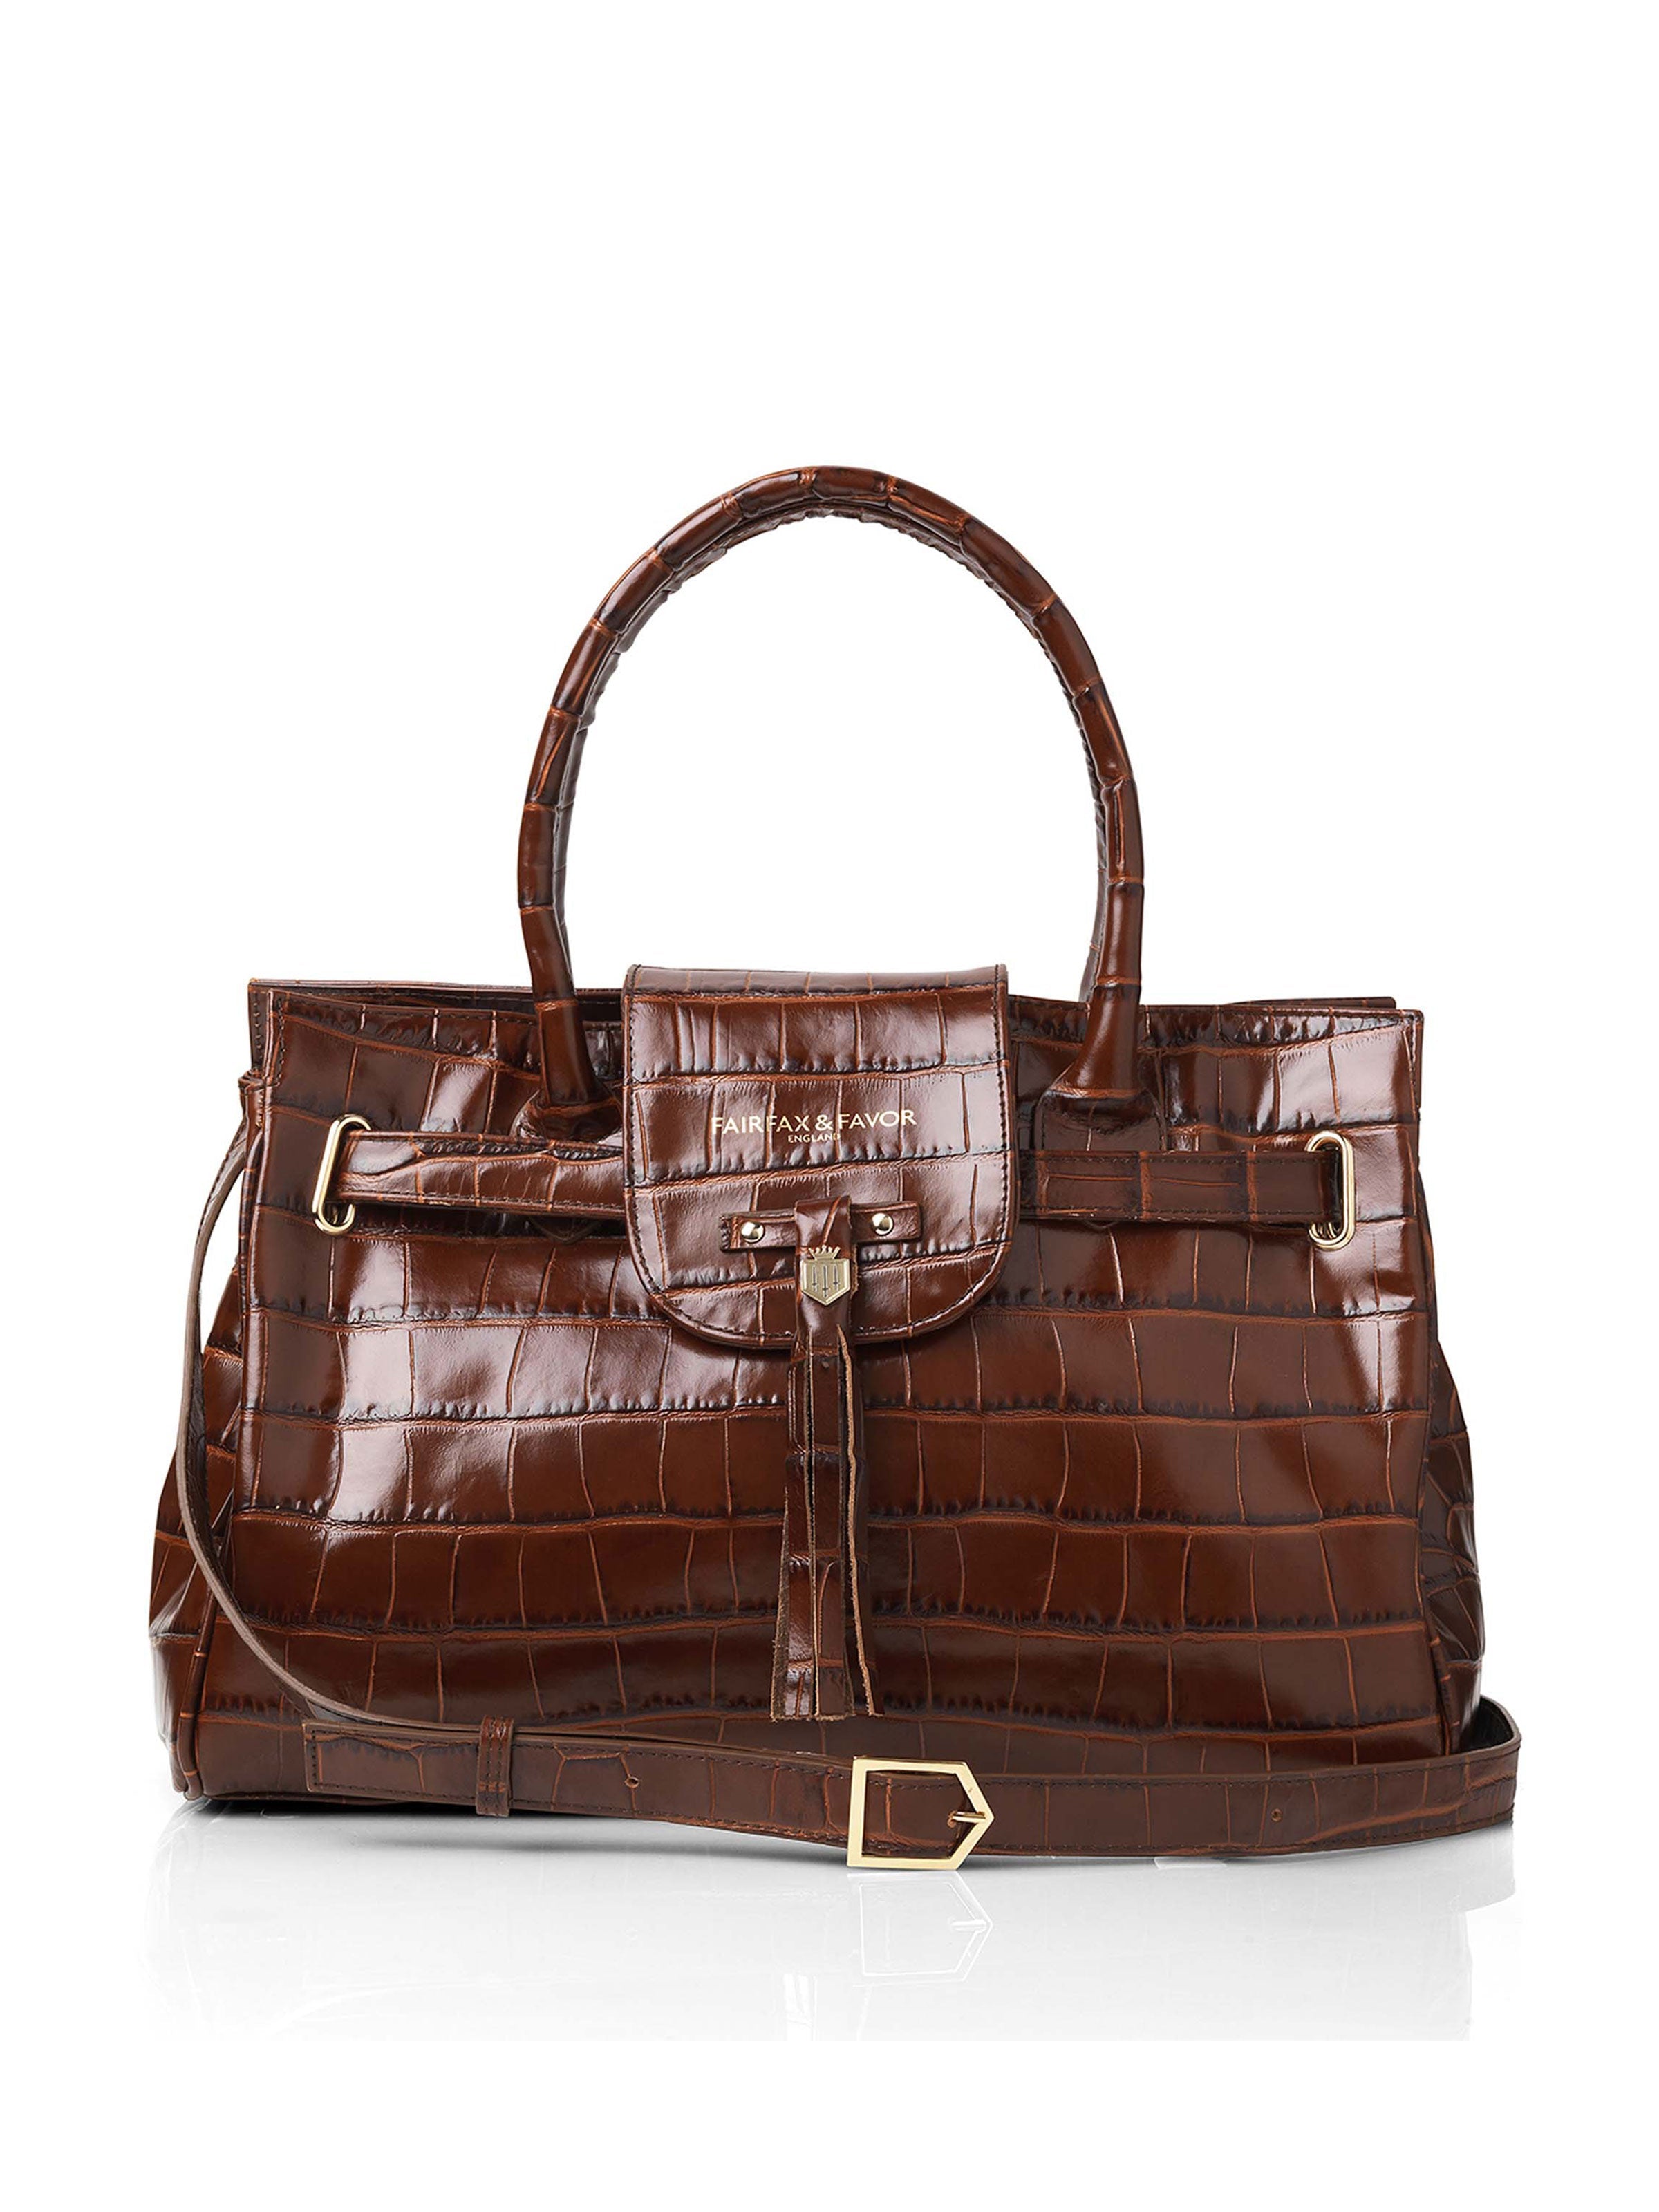 Windsor - Women's Handbag - Conker Leather | Fairfax & Favor